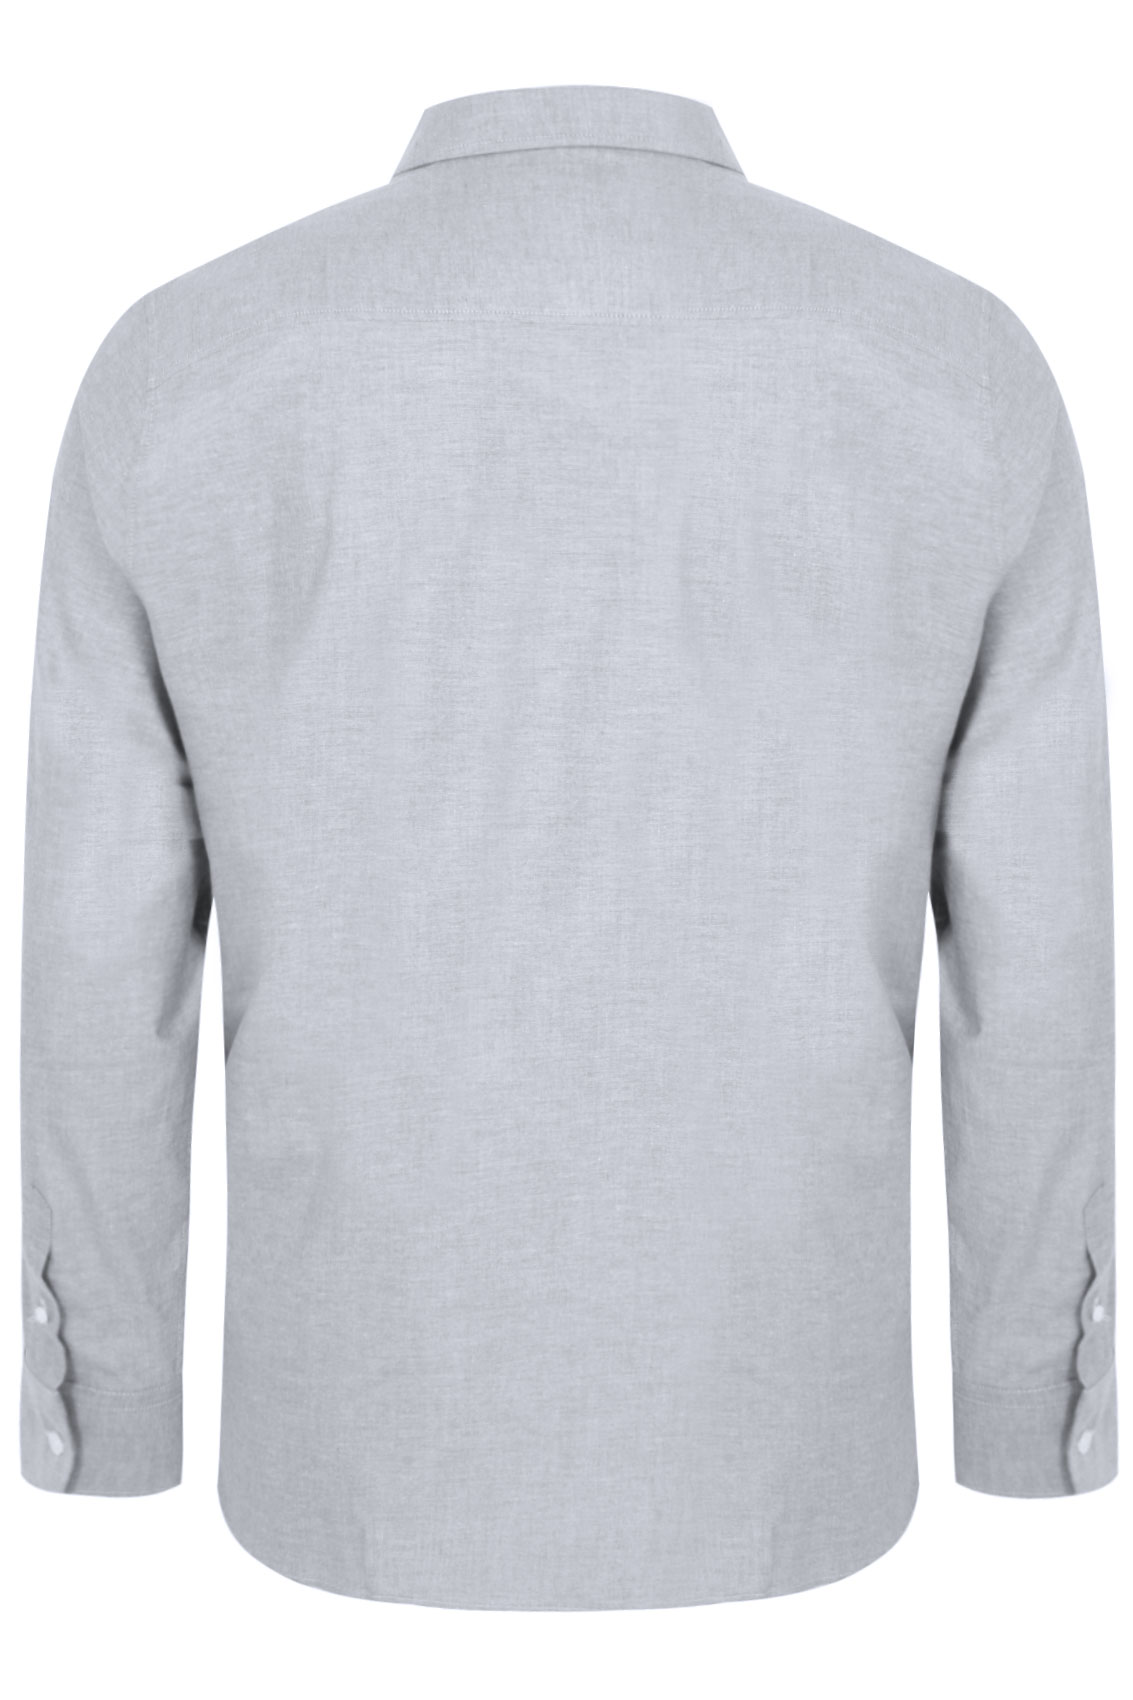 Slate Grey Light Grey Long Sleeved Oxford Shirt - TALL